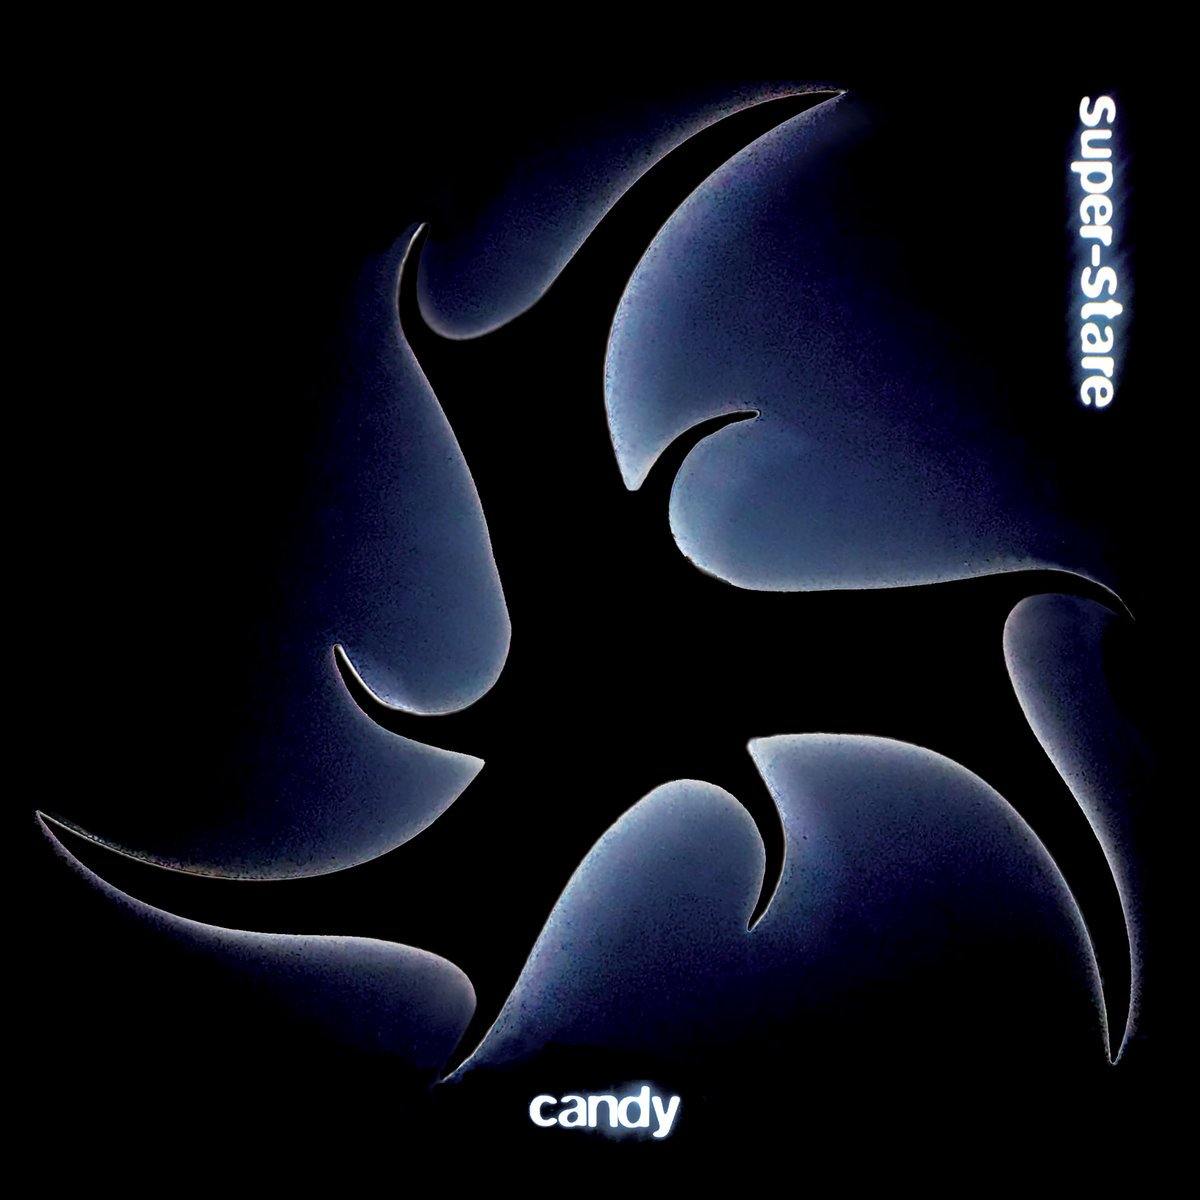 Buy – Candy "Super-Stare" 7" – Band & Music Merch – Cold Cuts Merch